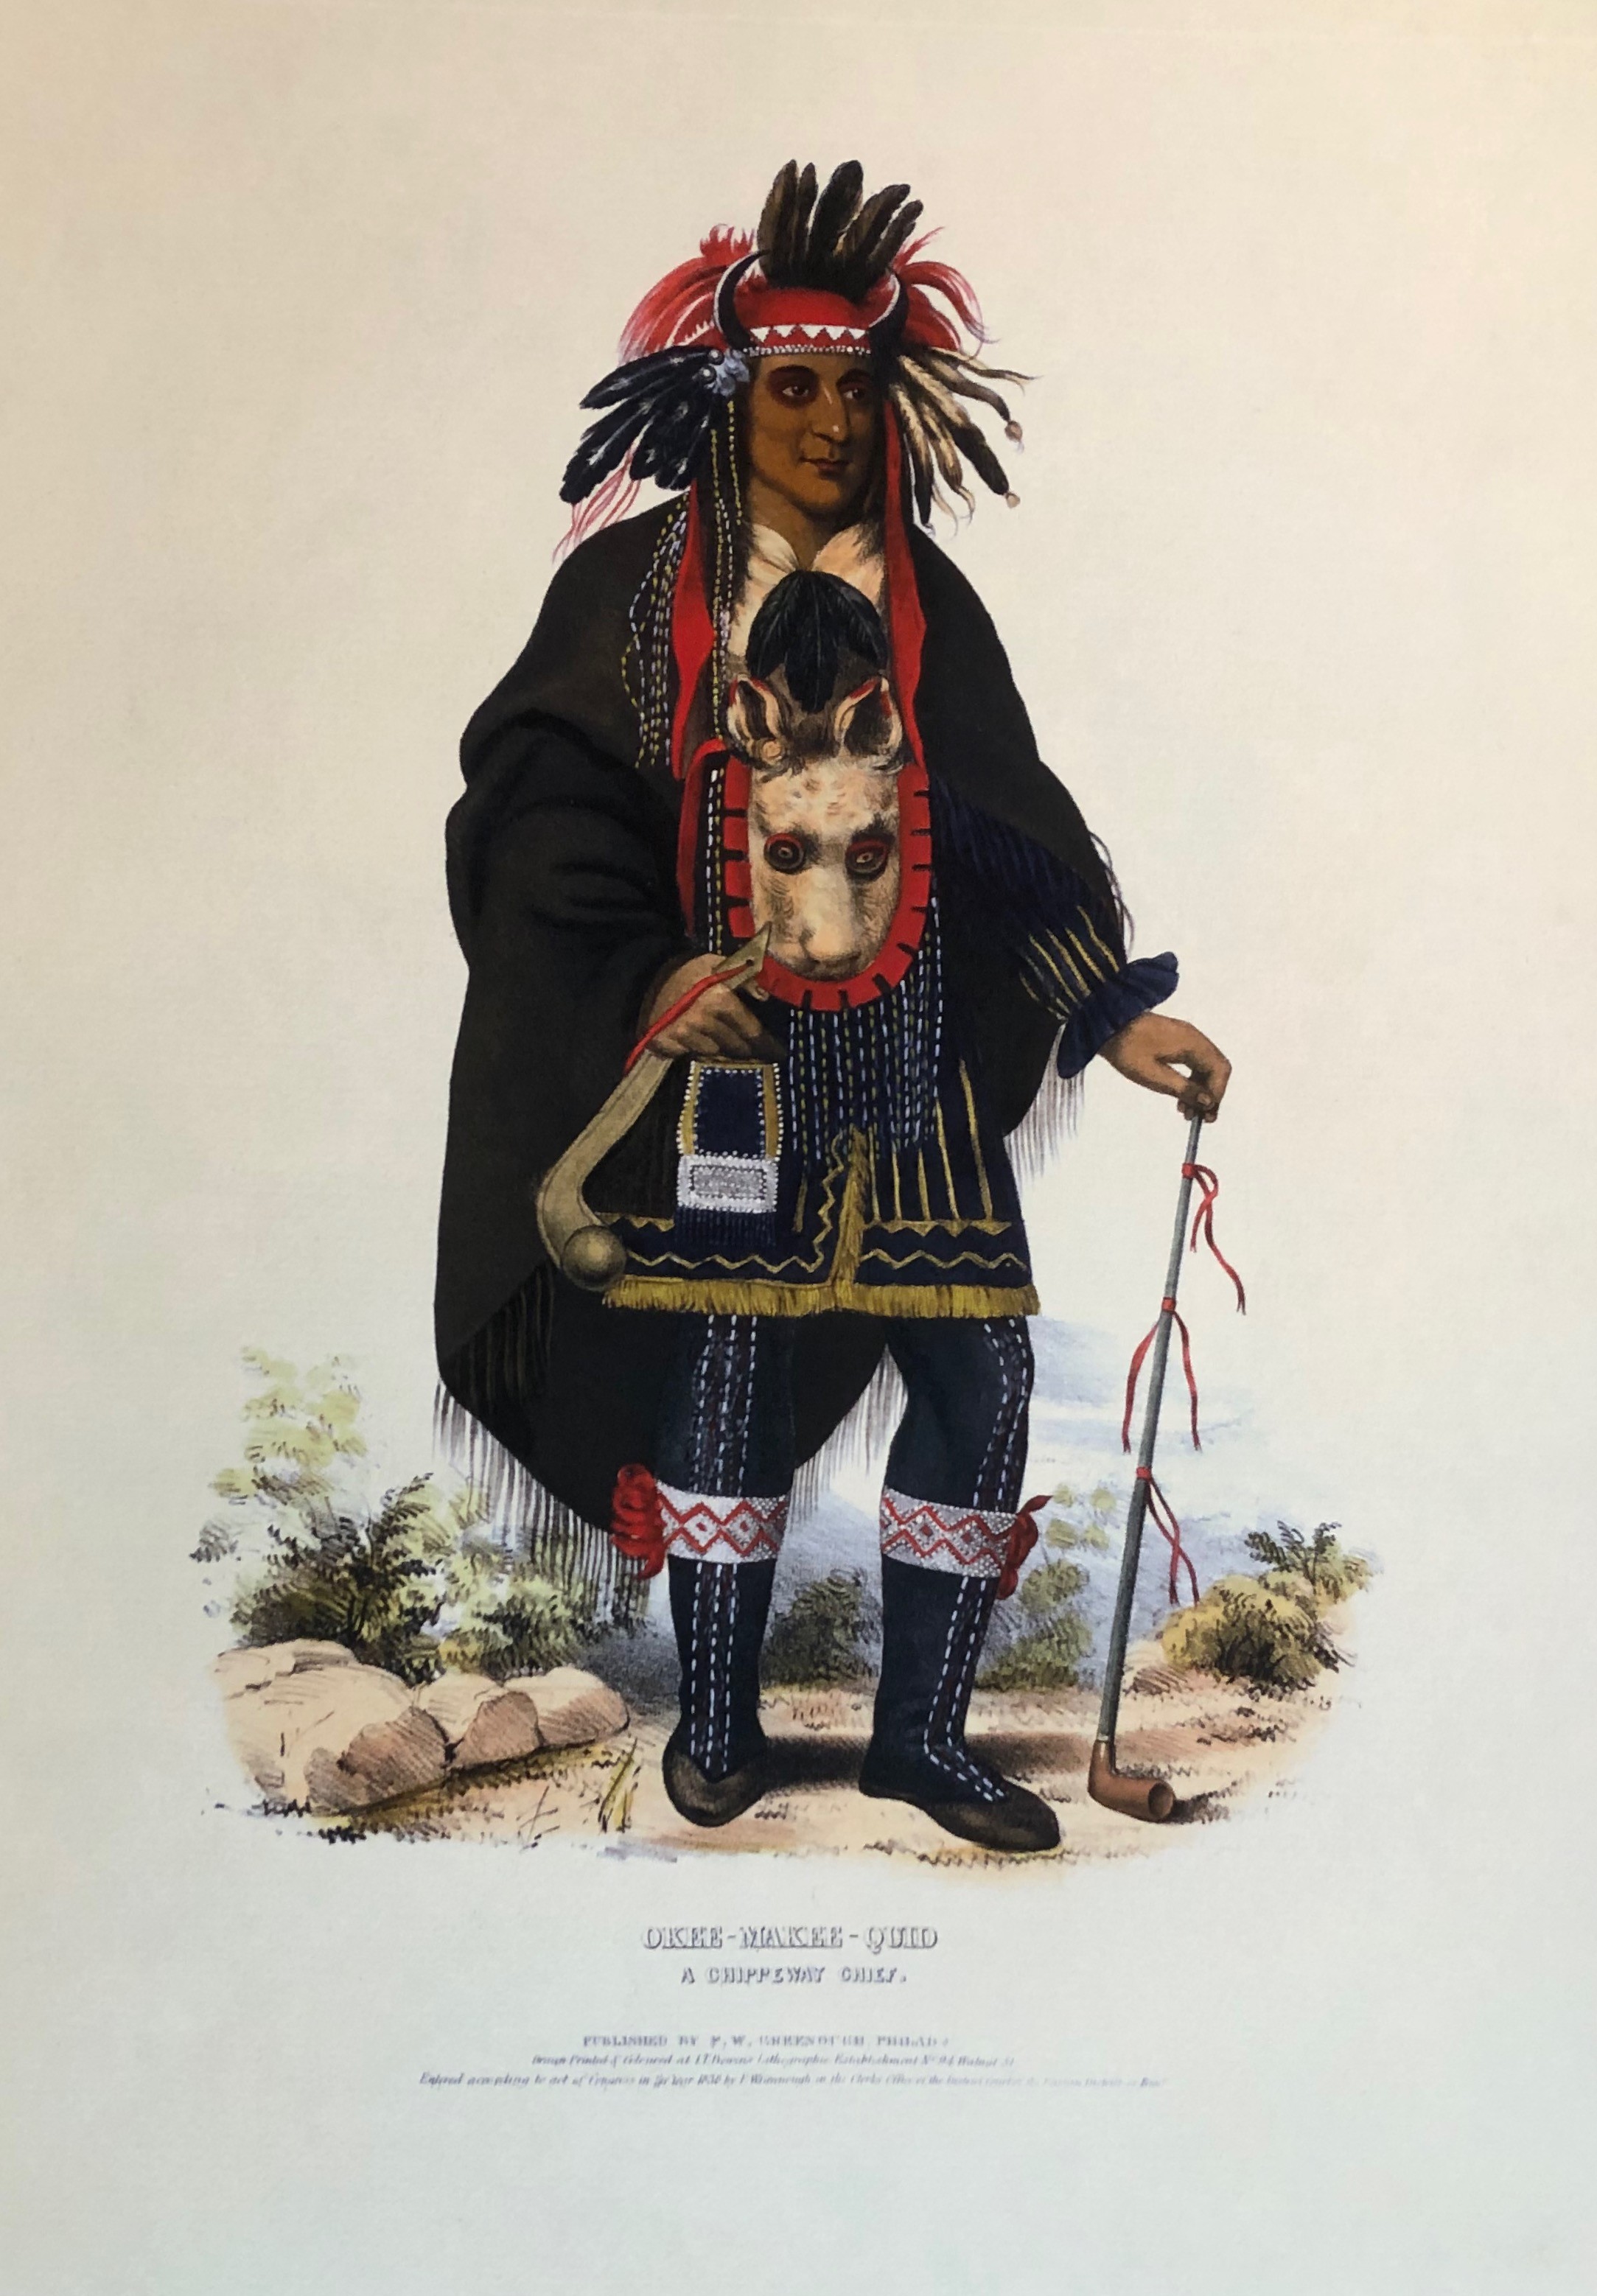 Okee-Makee-Quid, A Chippawa Chief